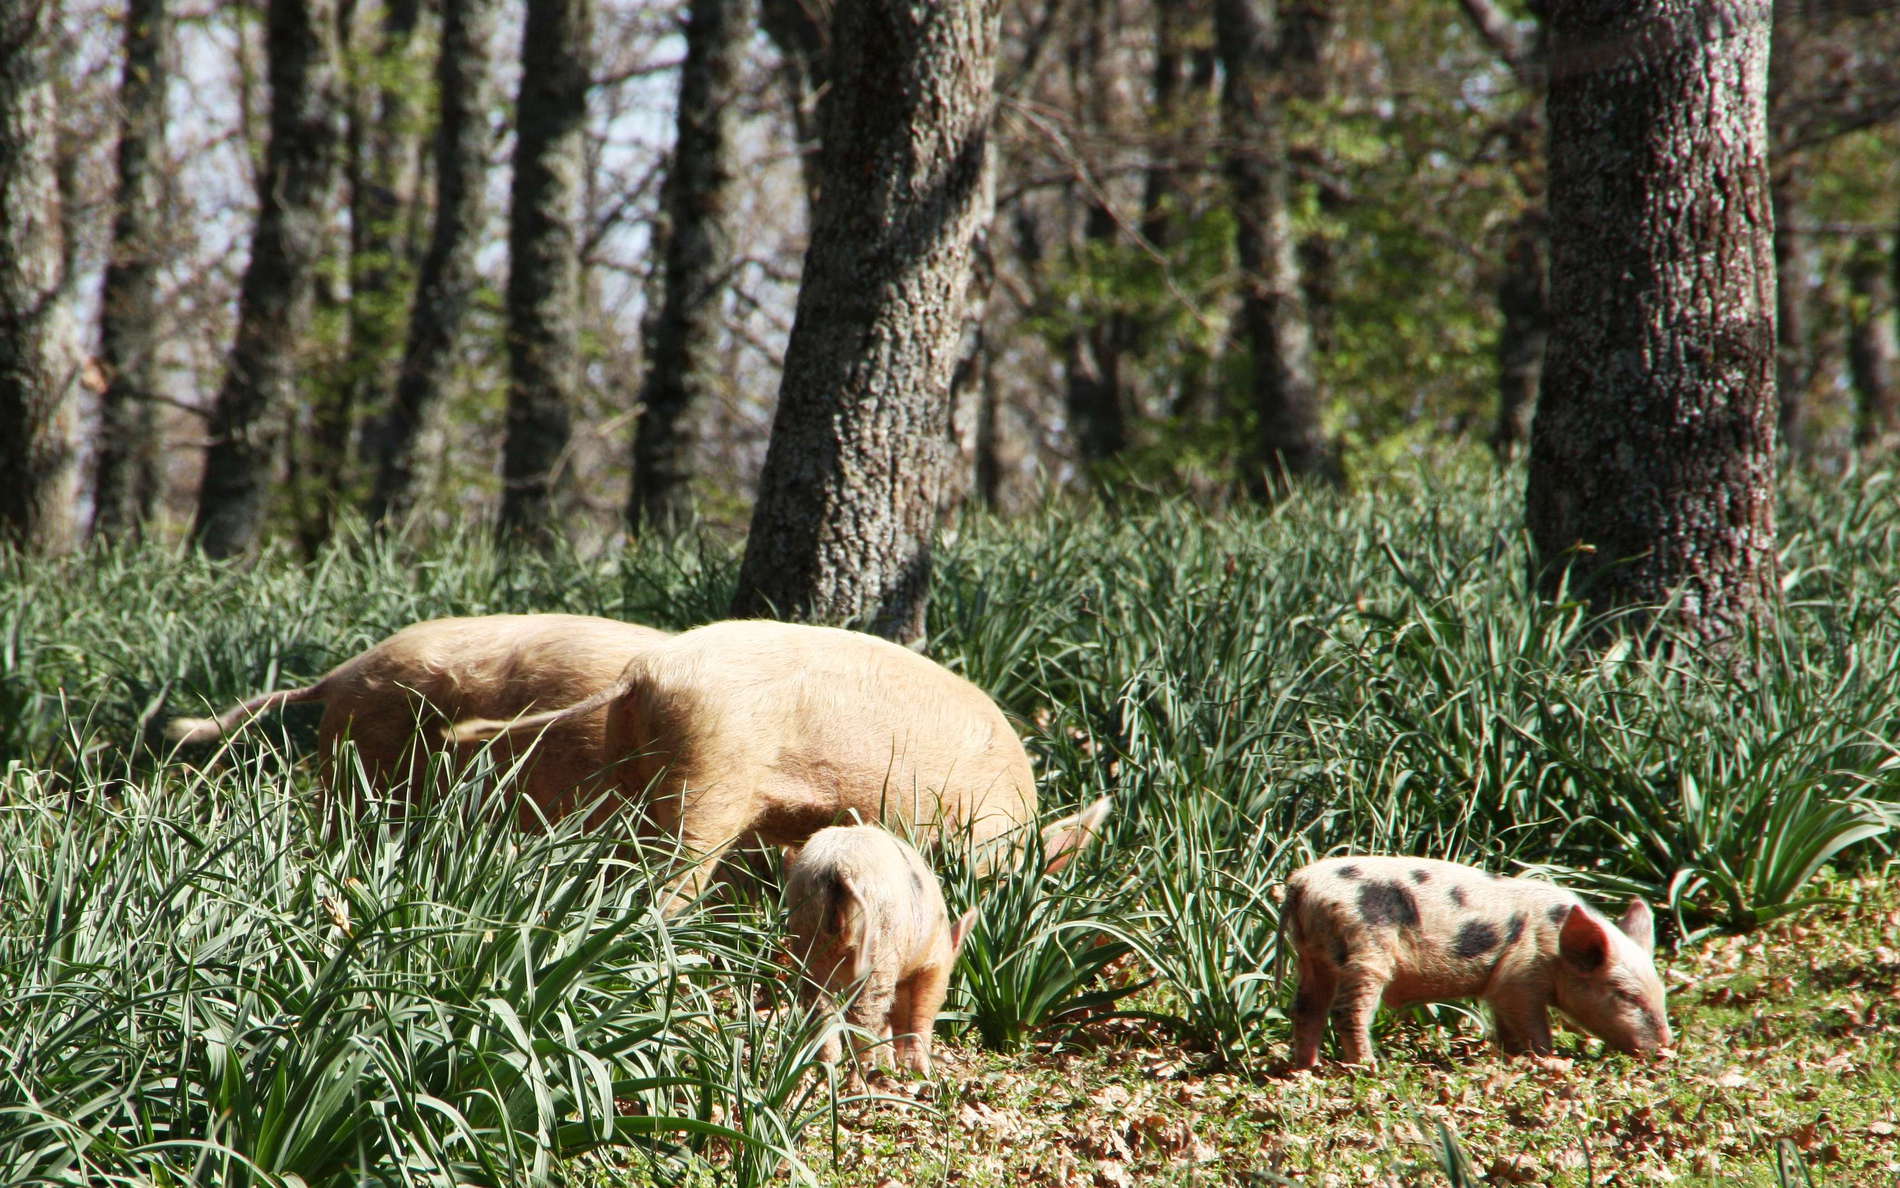 Gargano Peninsula | Pig grazing